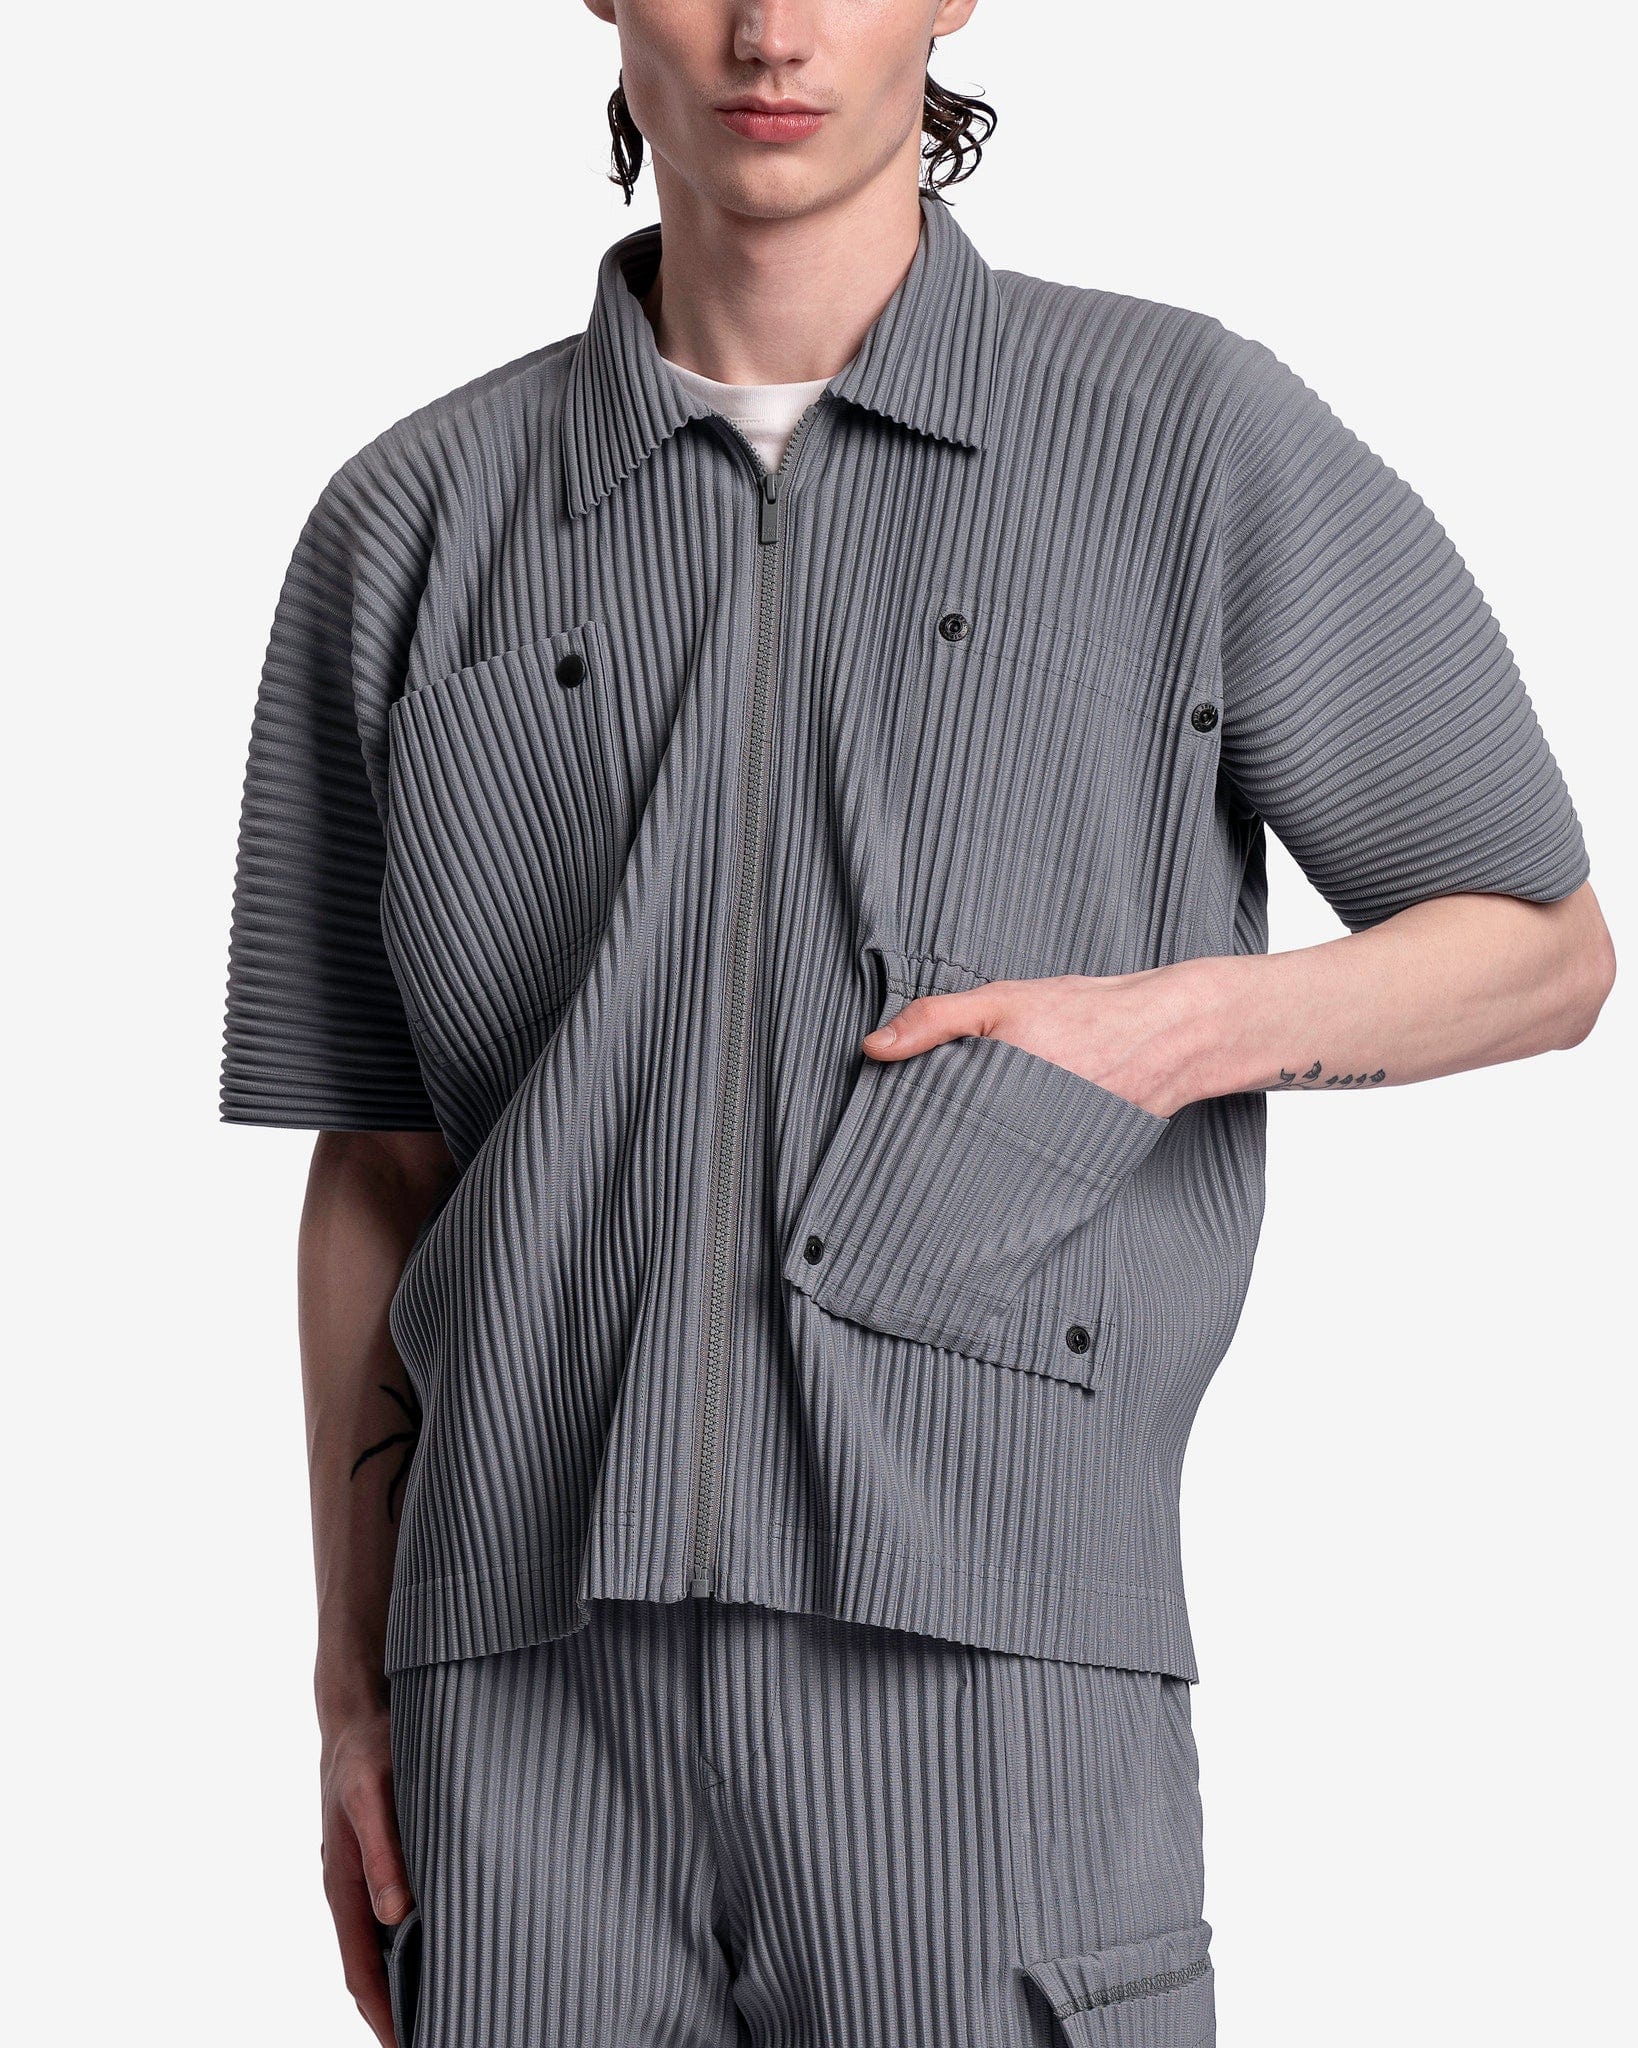 Homme Plissé Issey Miyake Men's Shirts Flip Shirt in Moss Grey